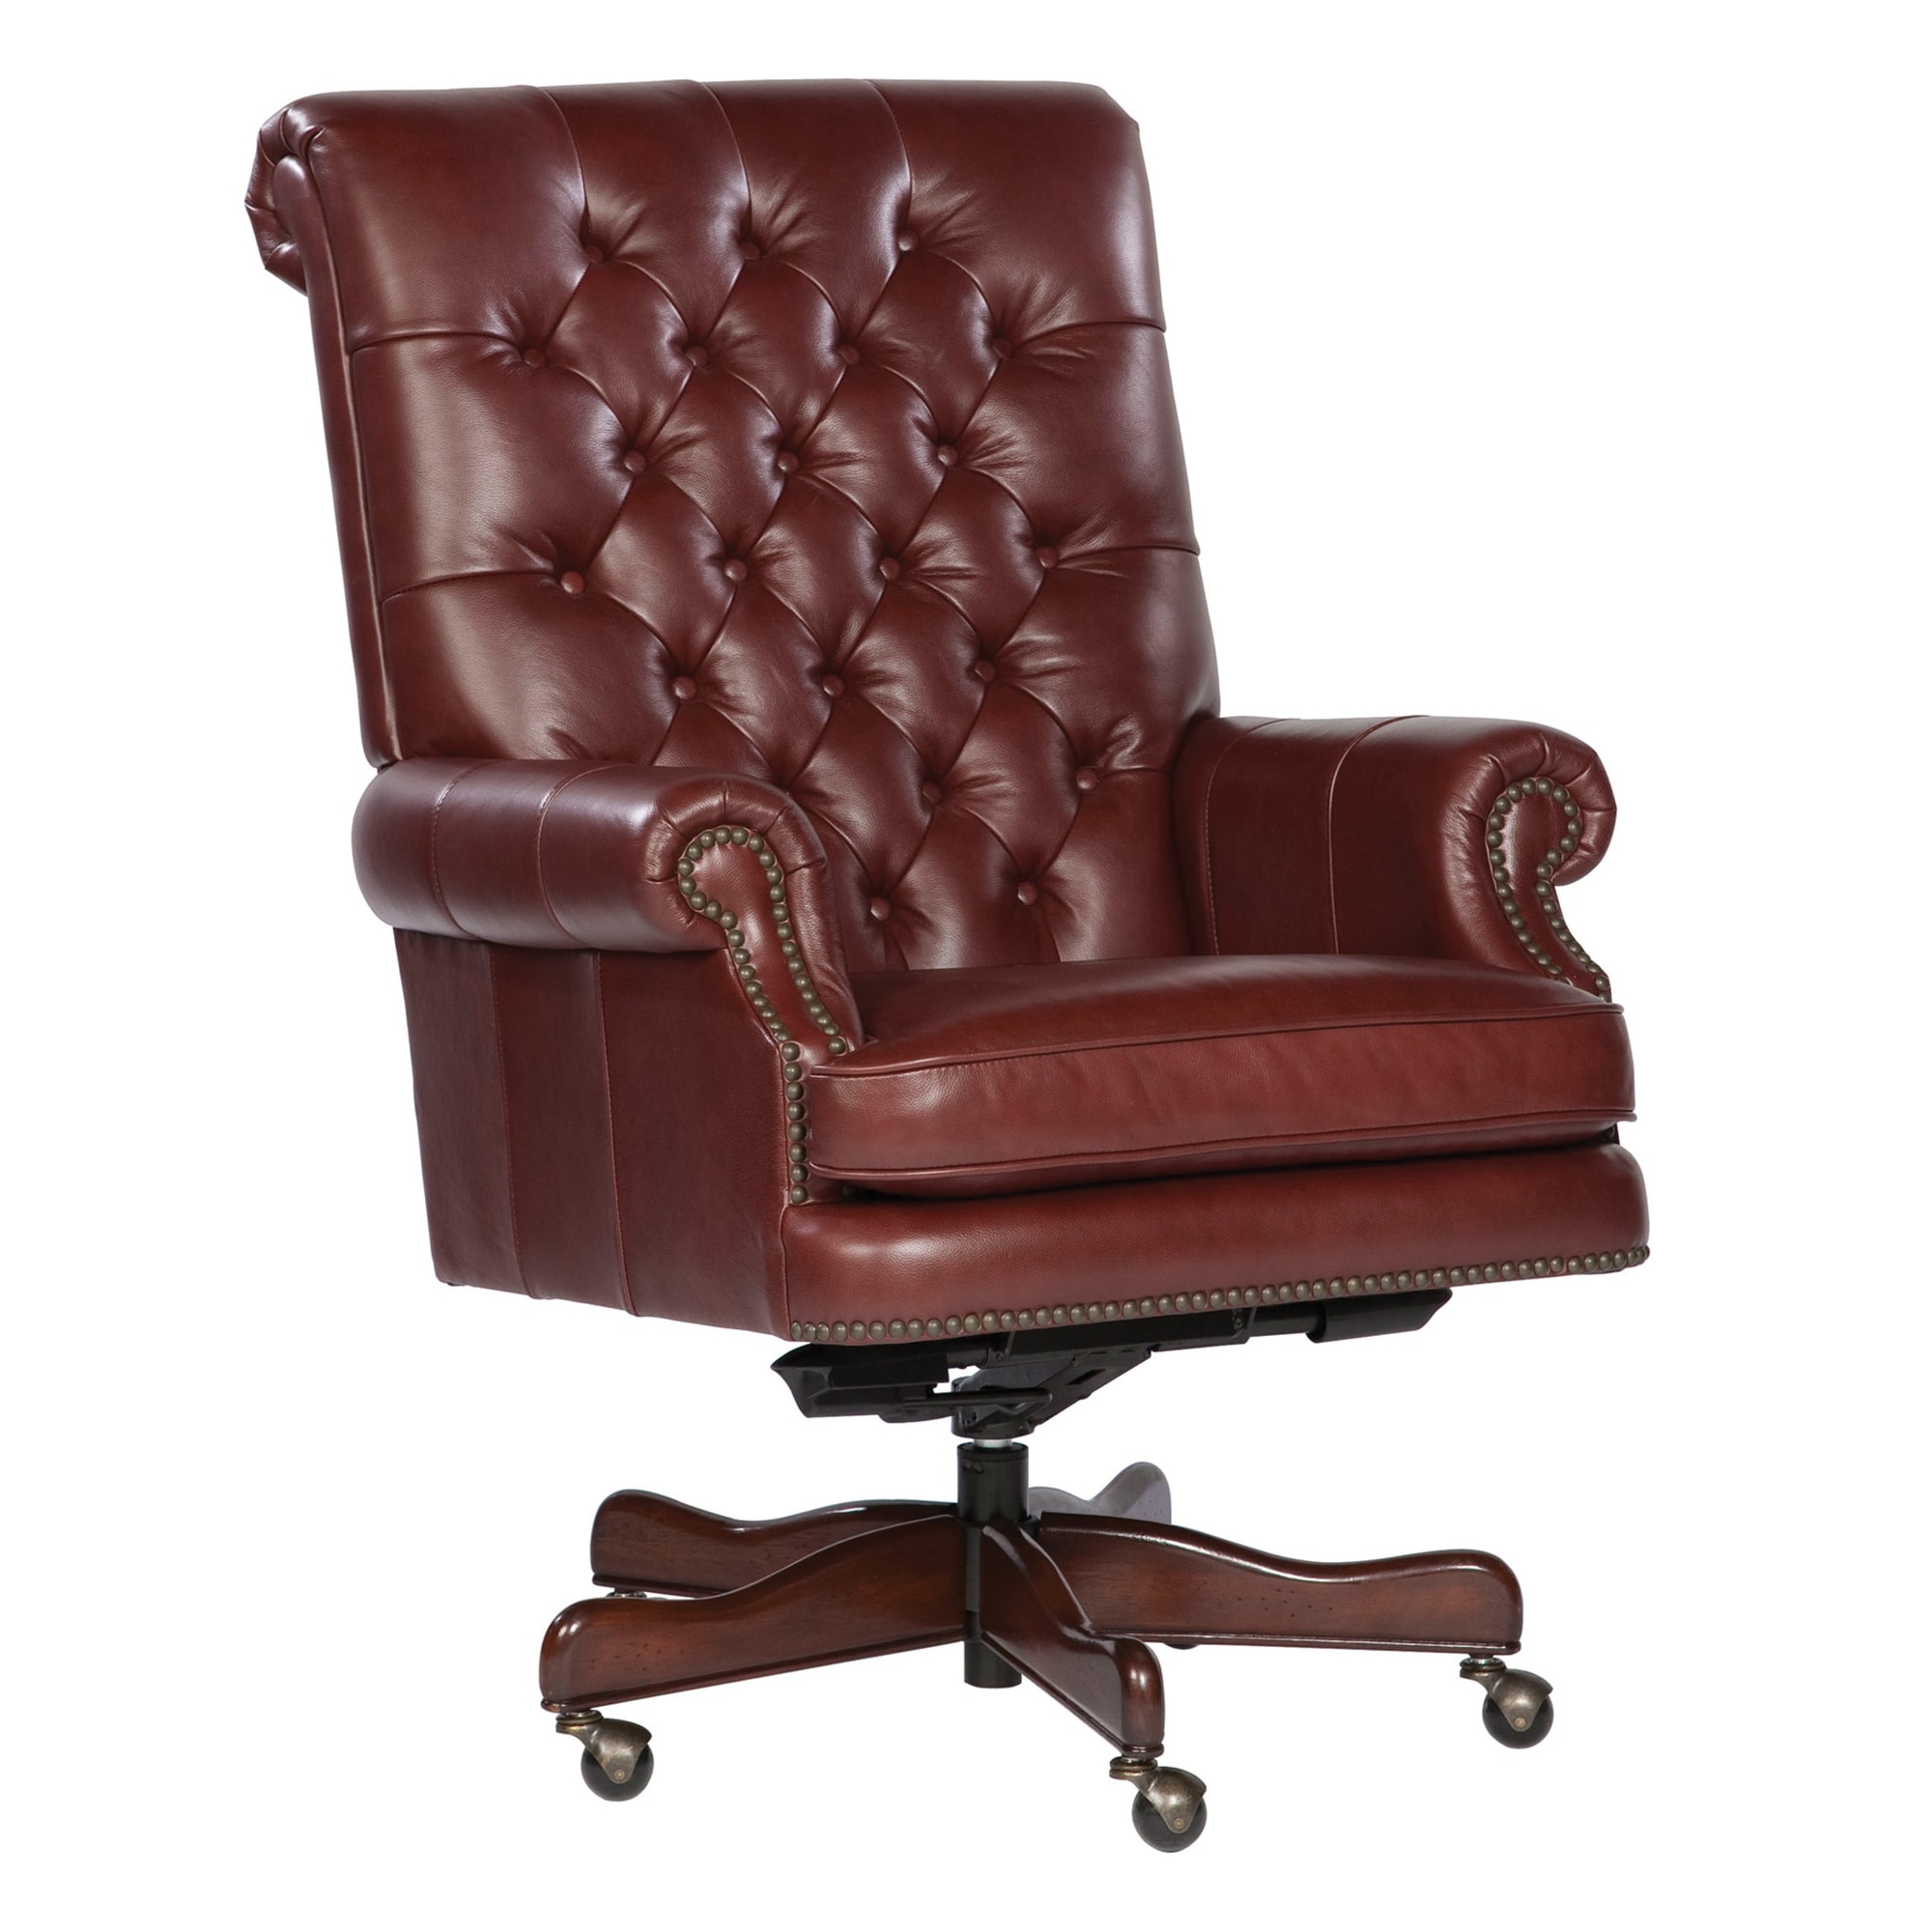 Hekman Executive Tilt Swivel Leather Chair in Merlot